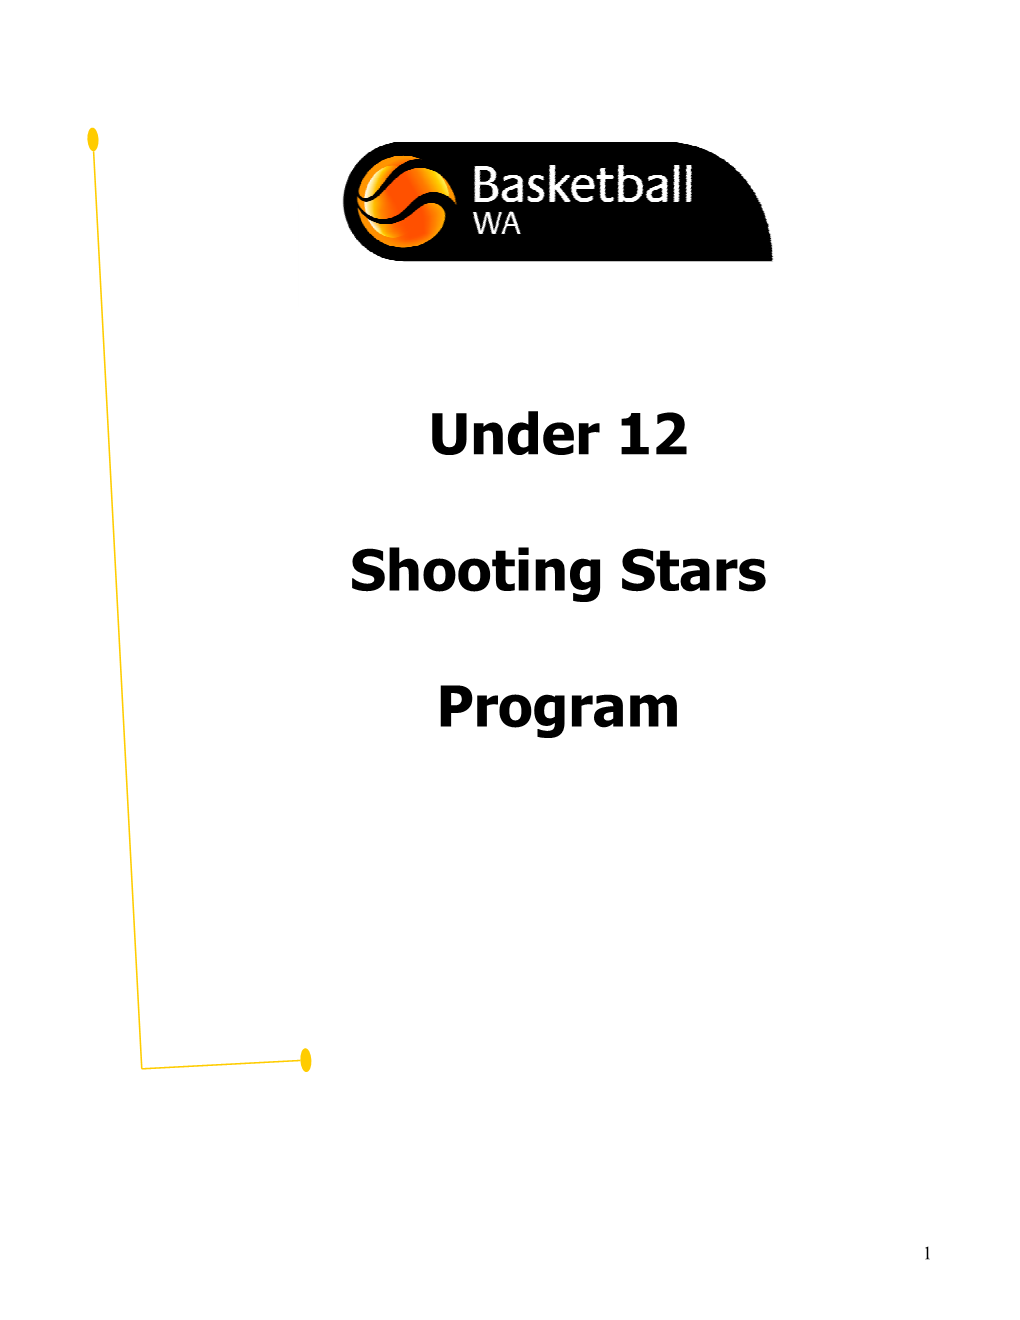 Under 12 Shooting Stars Program Staff